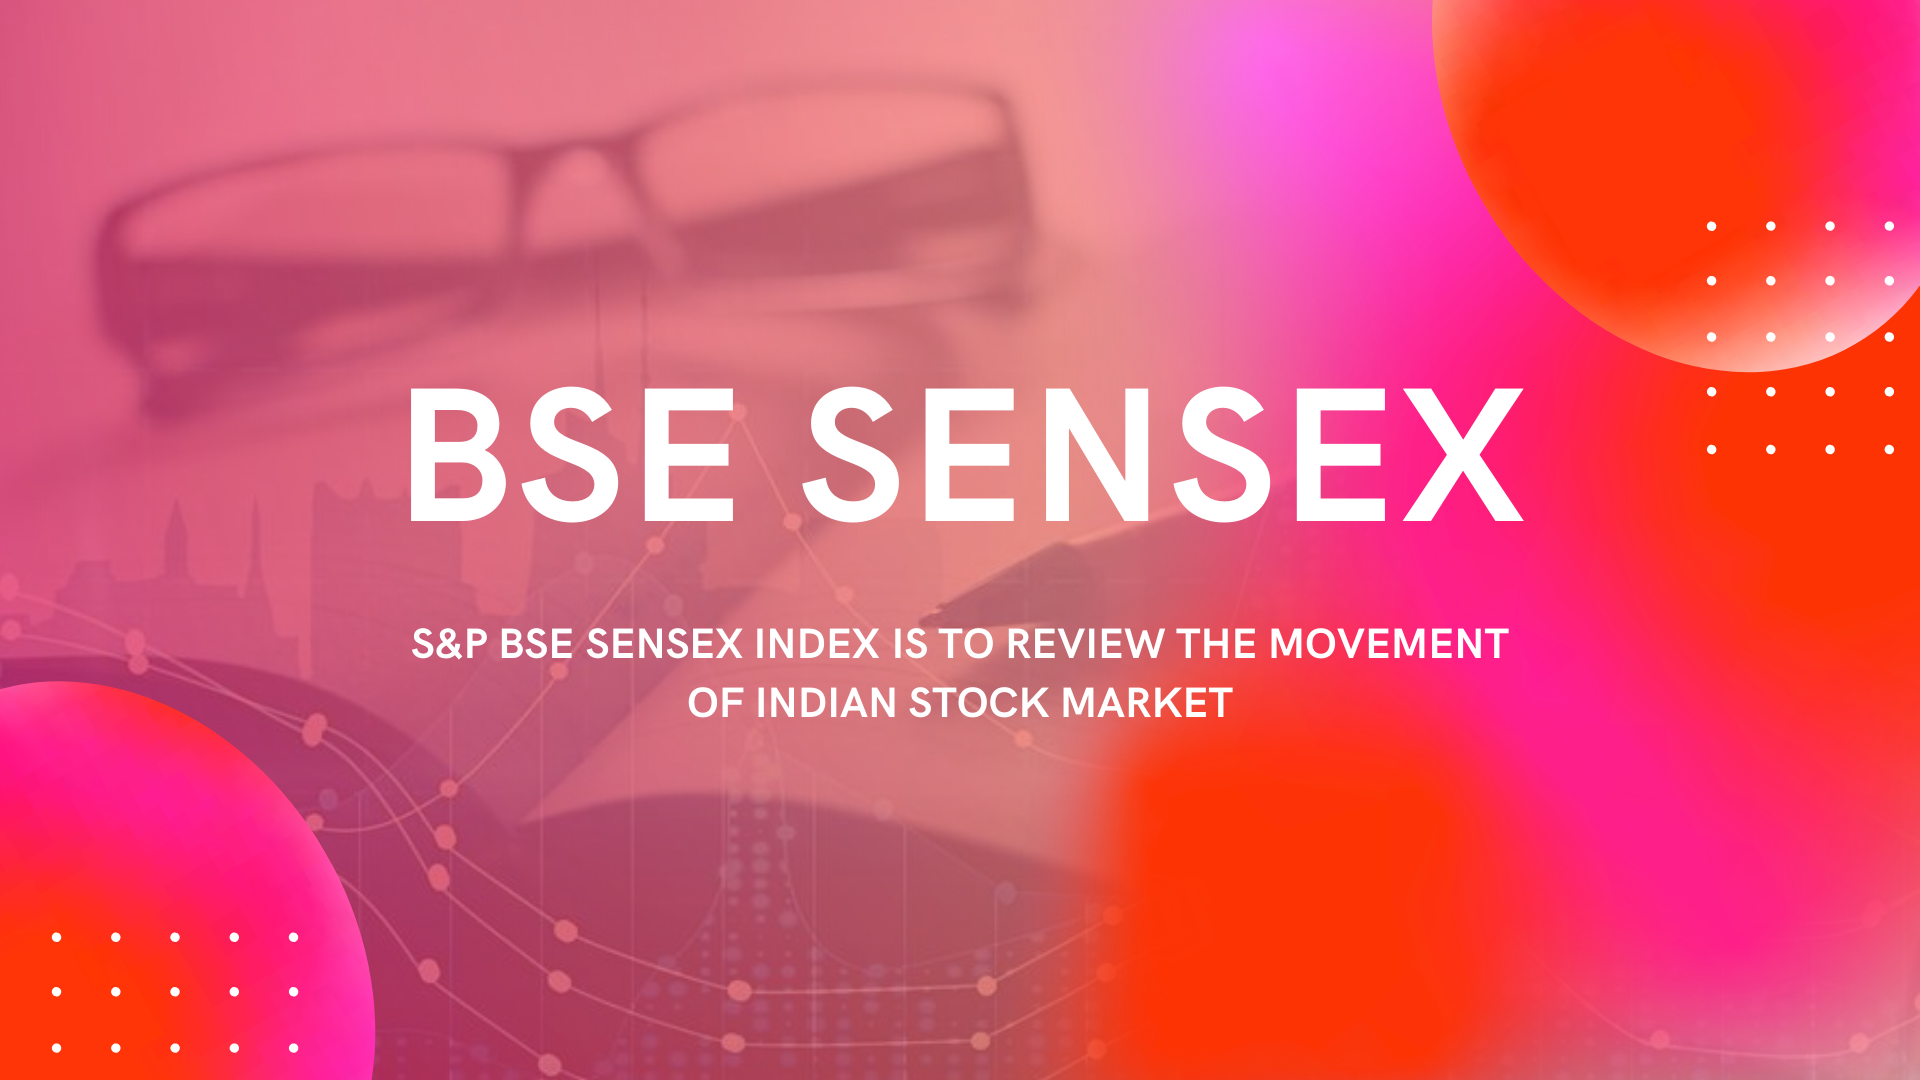 BSE SENSEX